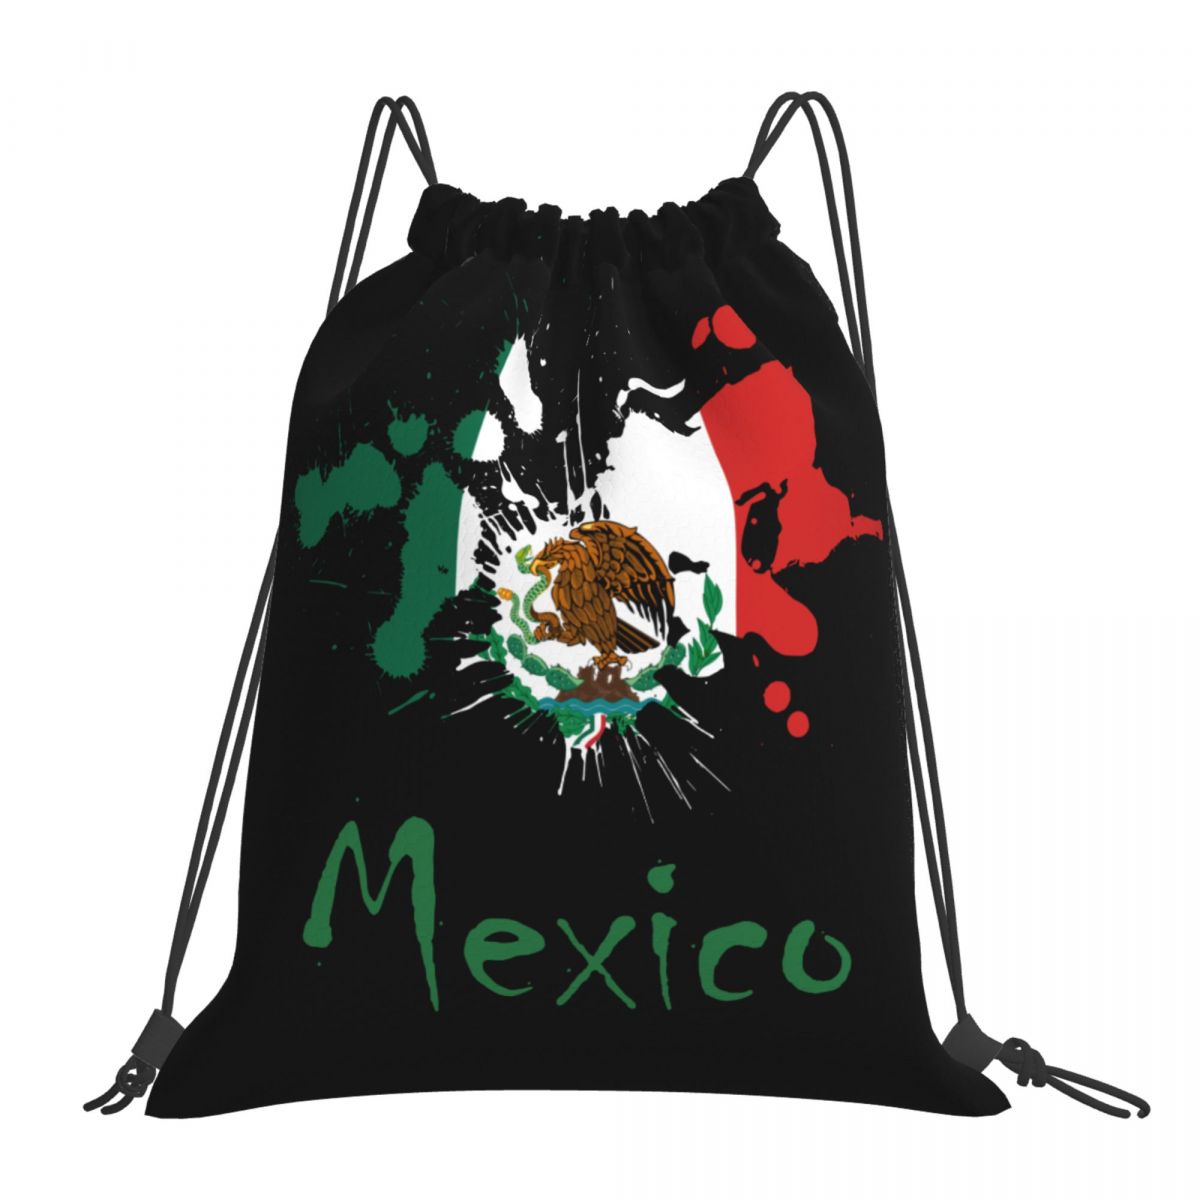 Mexico Ink Spatter Unisex Drawstring Backpack Bag Travel Sackpack